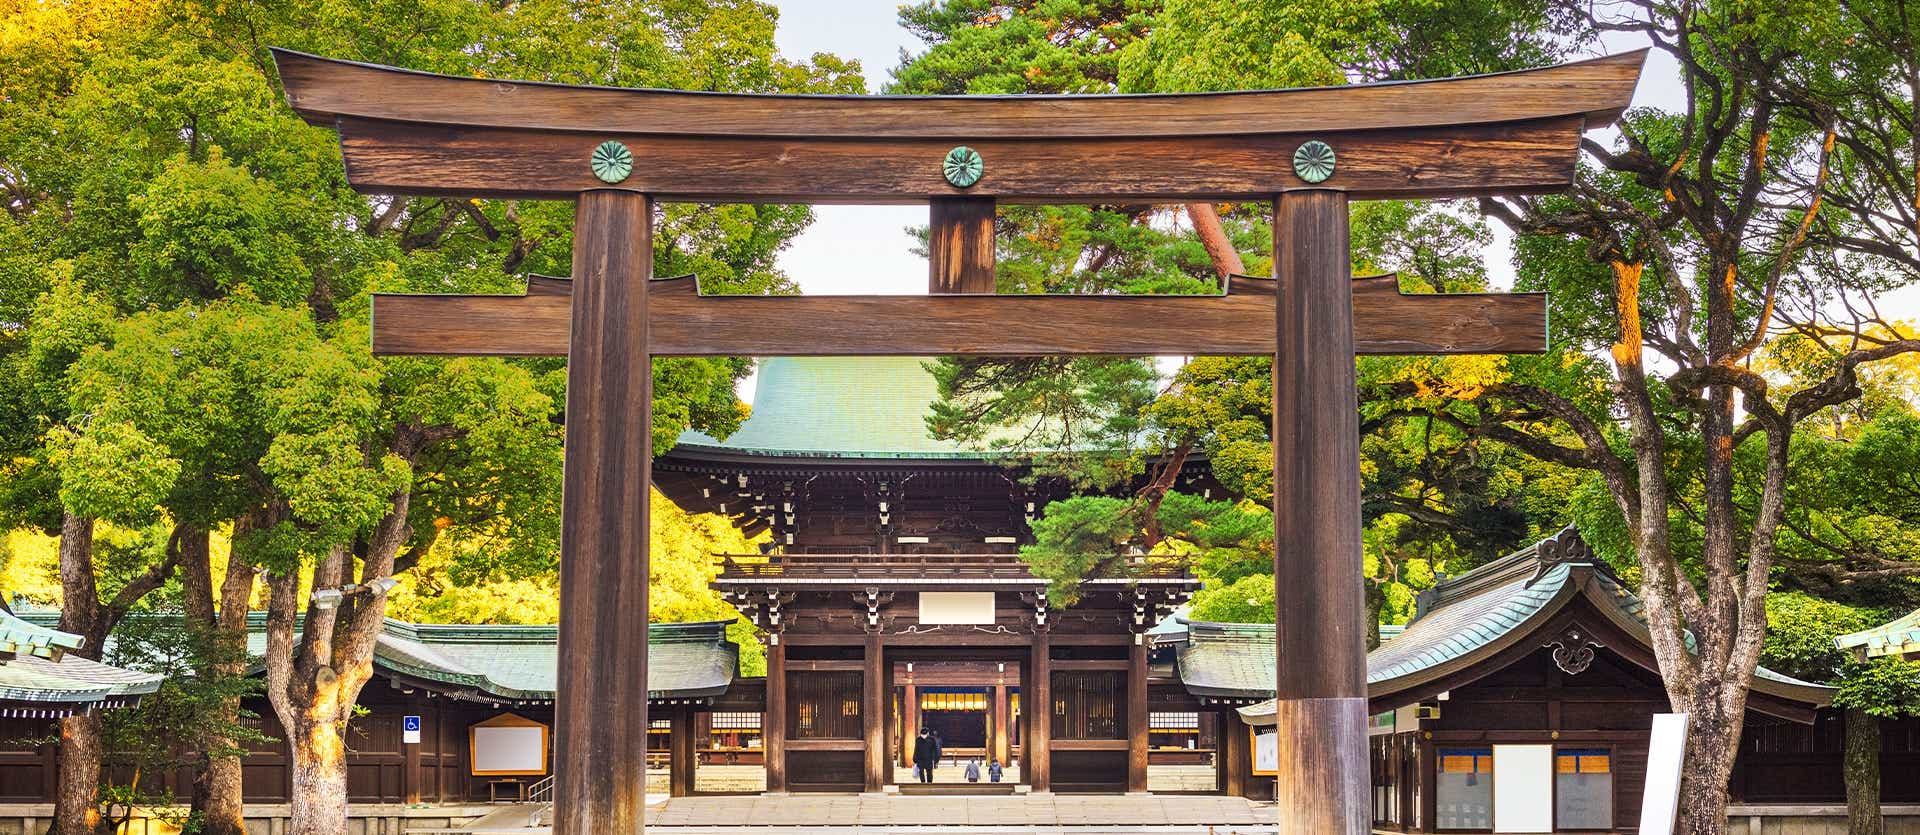 Meiji Shrine <span class="iconos separador"></span> Tokyo